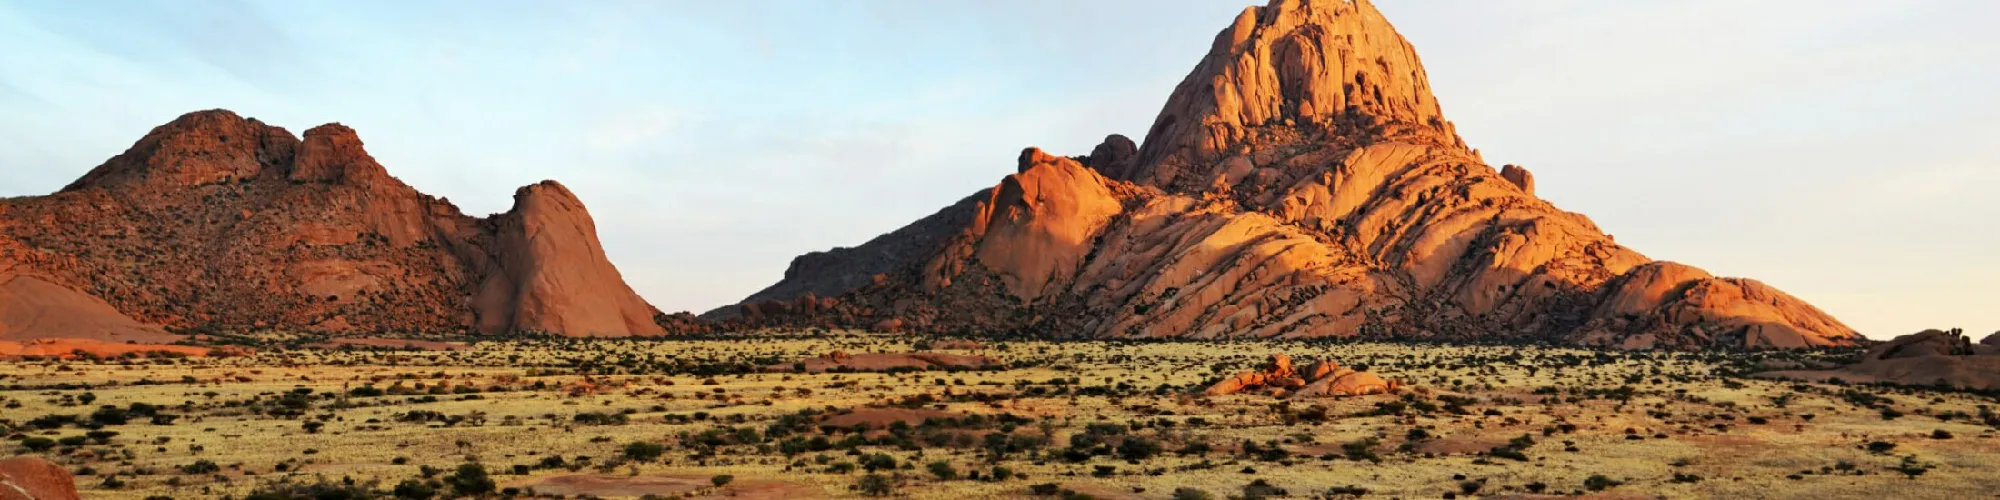 Fernreisen nach Namibia background image